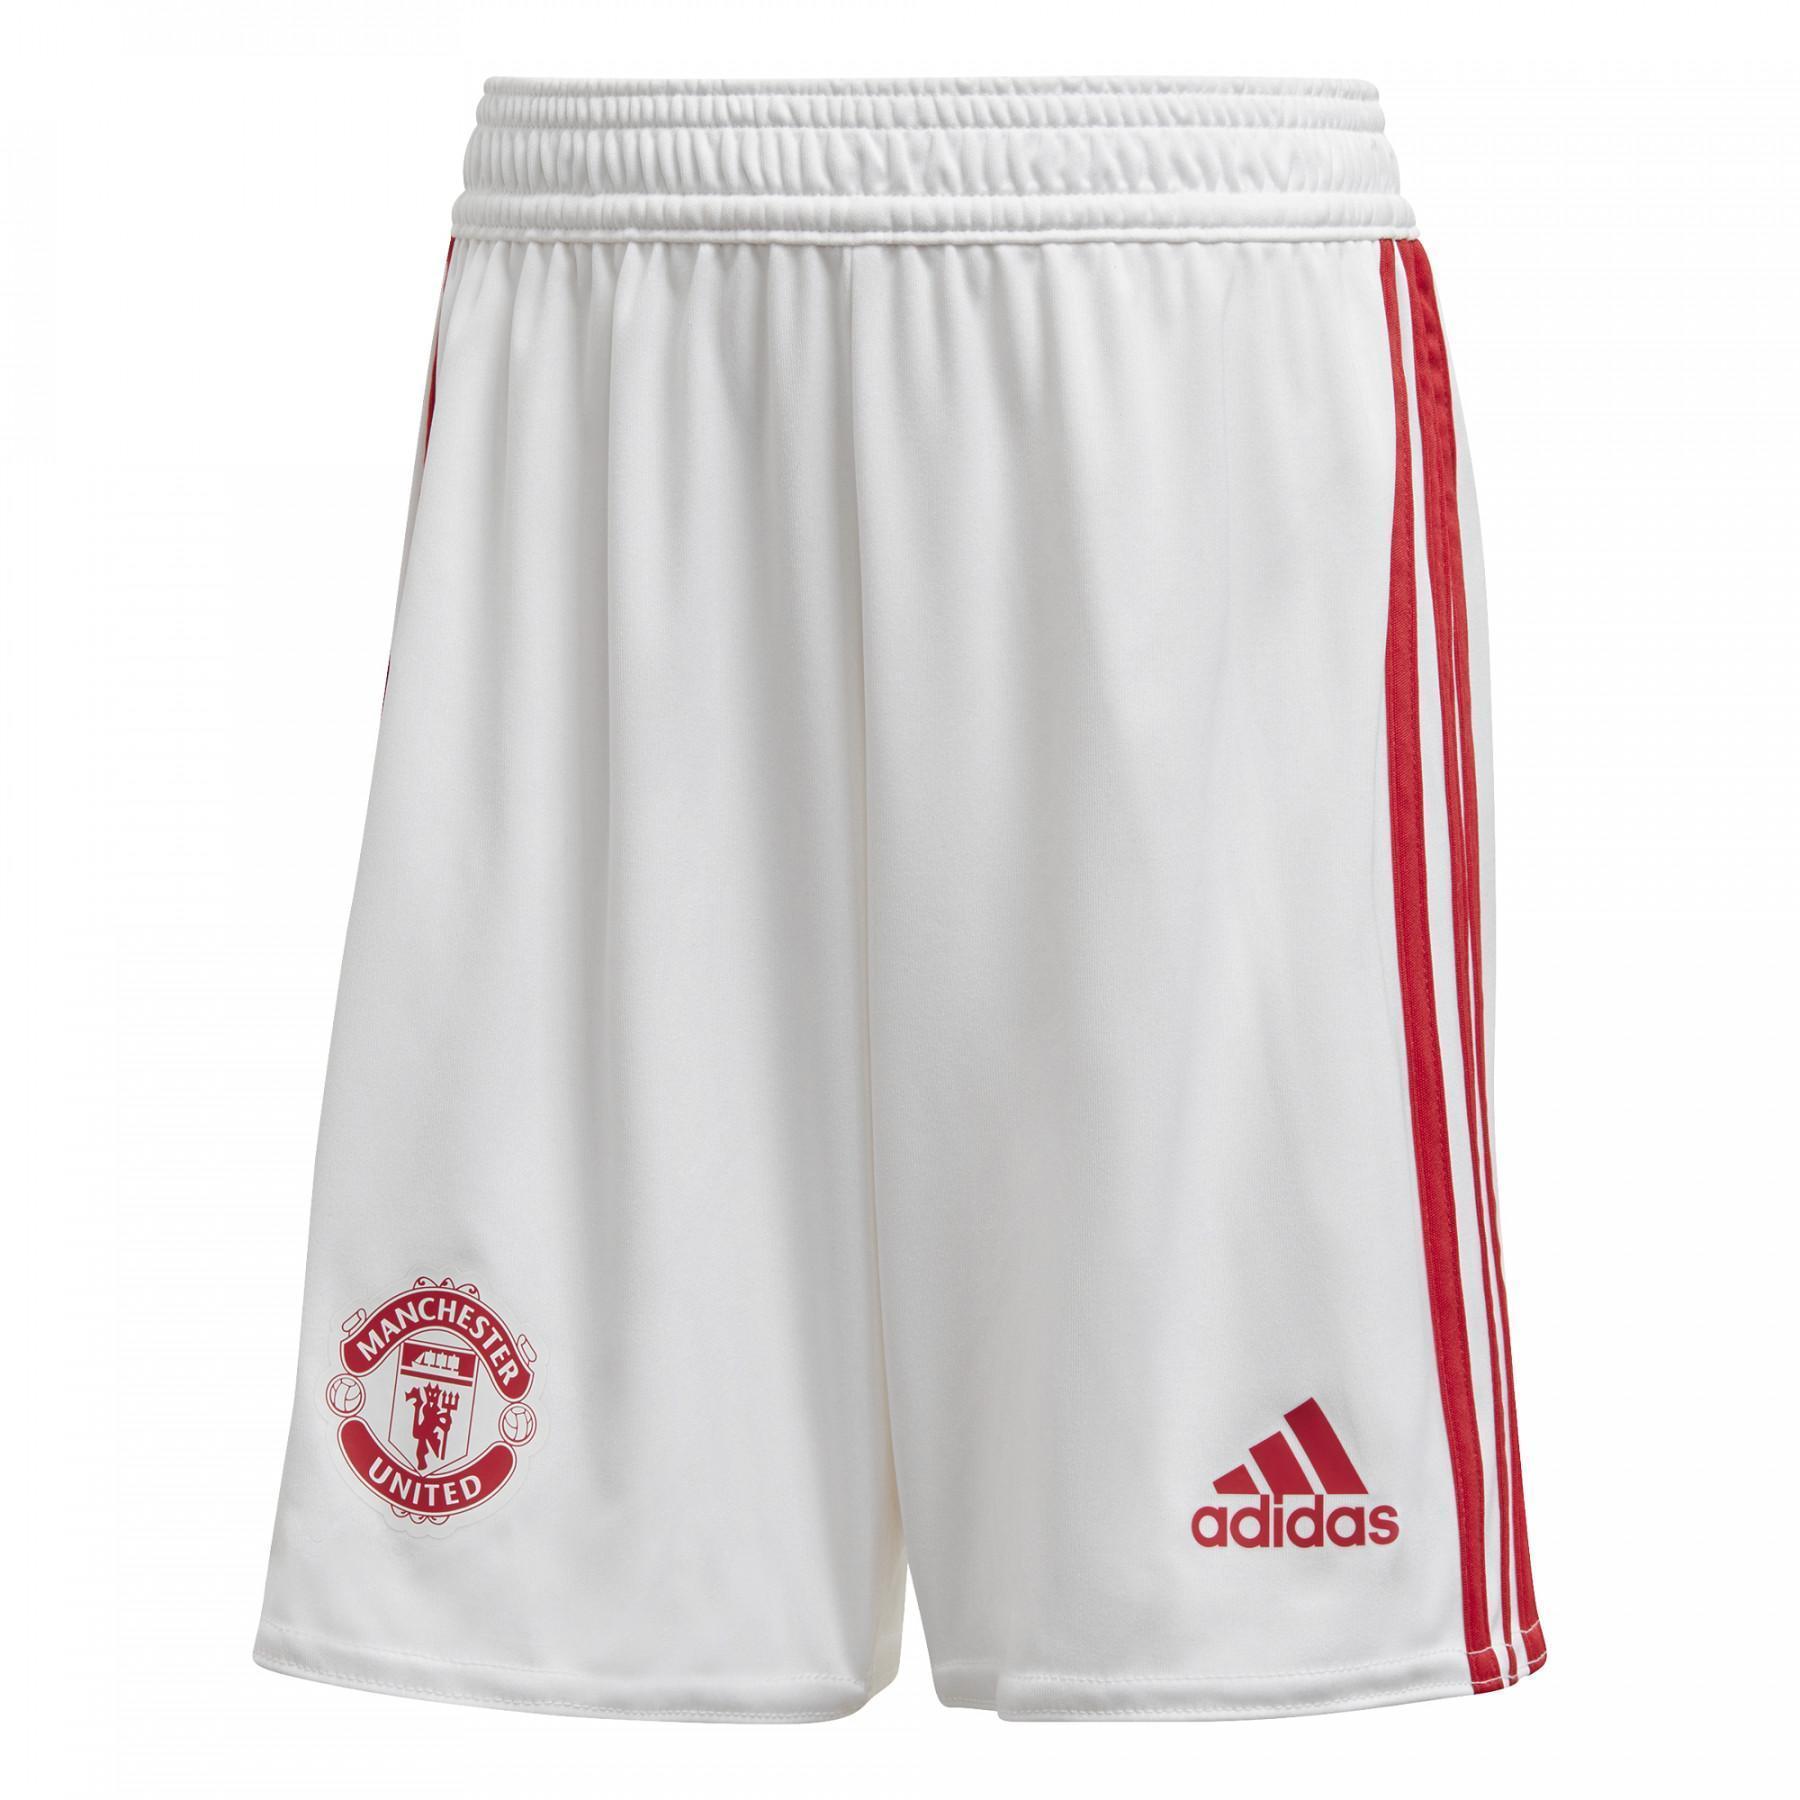 Mini-kit trzeci Manchester United 2020/21